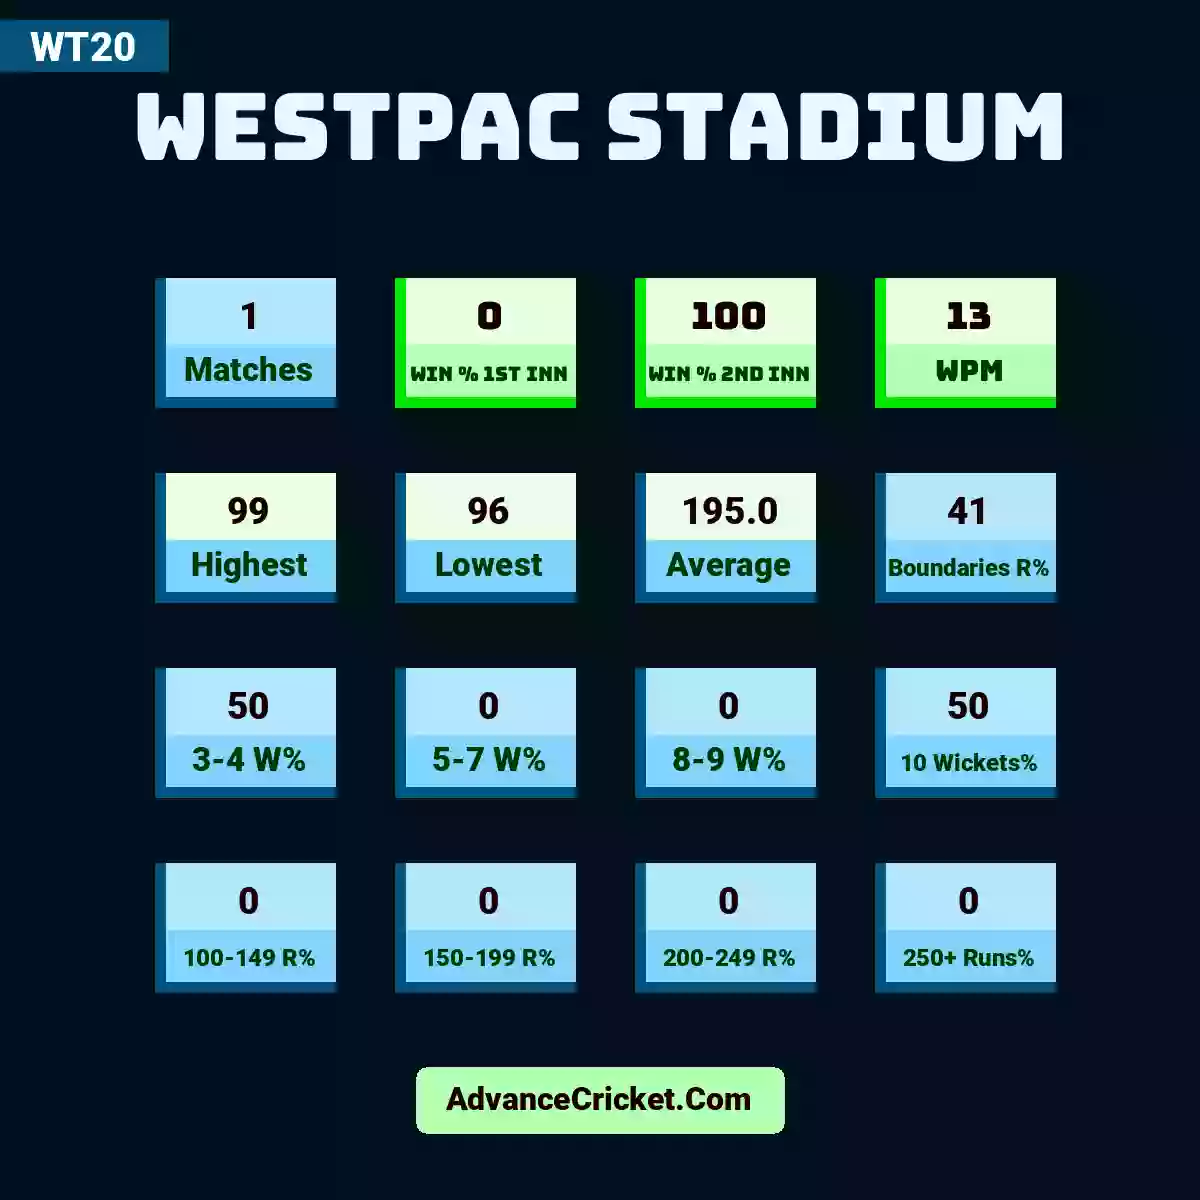 Image showing Westpac Stadium with Matches: 1, Win % 1st Inn: 0, Win % 2nd Inn: 100, WPM: 13, Highest: 99, Lowest: 96, Average: 195.0, Boundaries R%: 41, 3-4 W%: 50, 5-7 W%: 0, 8-9 W%: 0, 10 Wickets%: 50, 100-149 R%: 0, 150-199 R%: 0, 200-249 R%: 0, 250+ Runs%: 0.